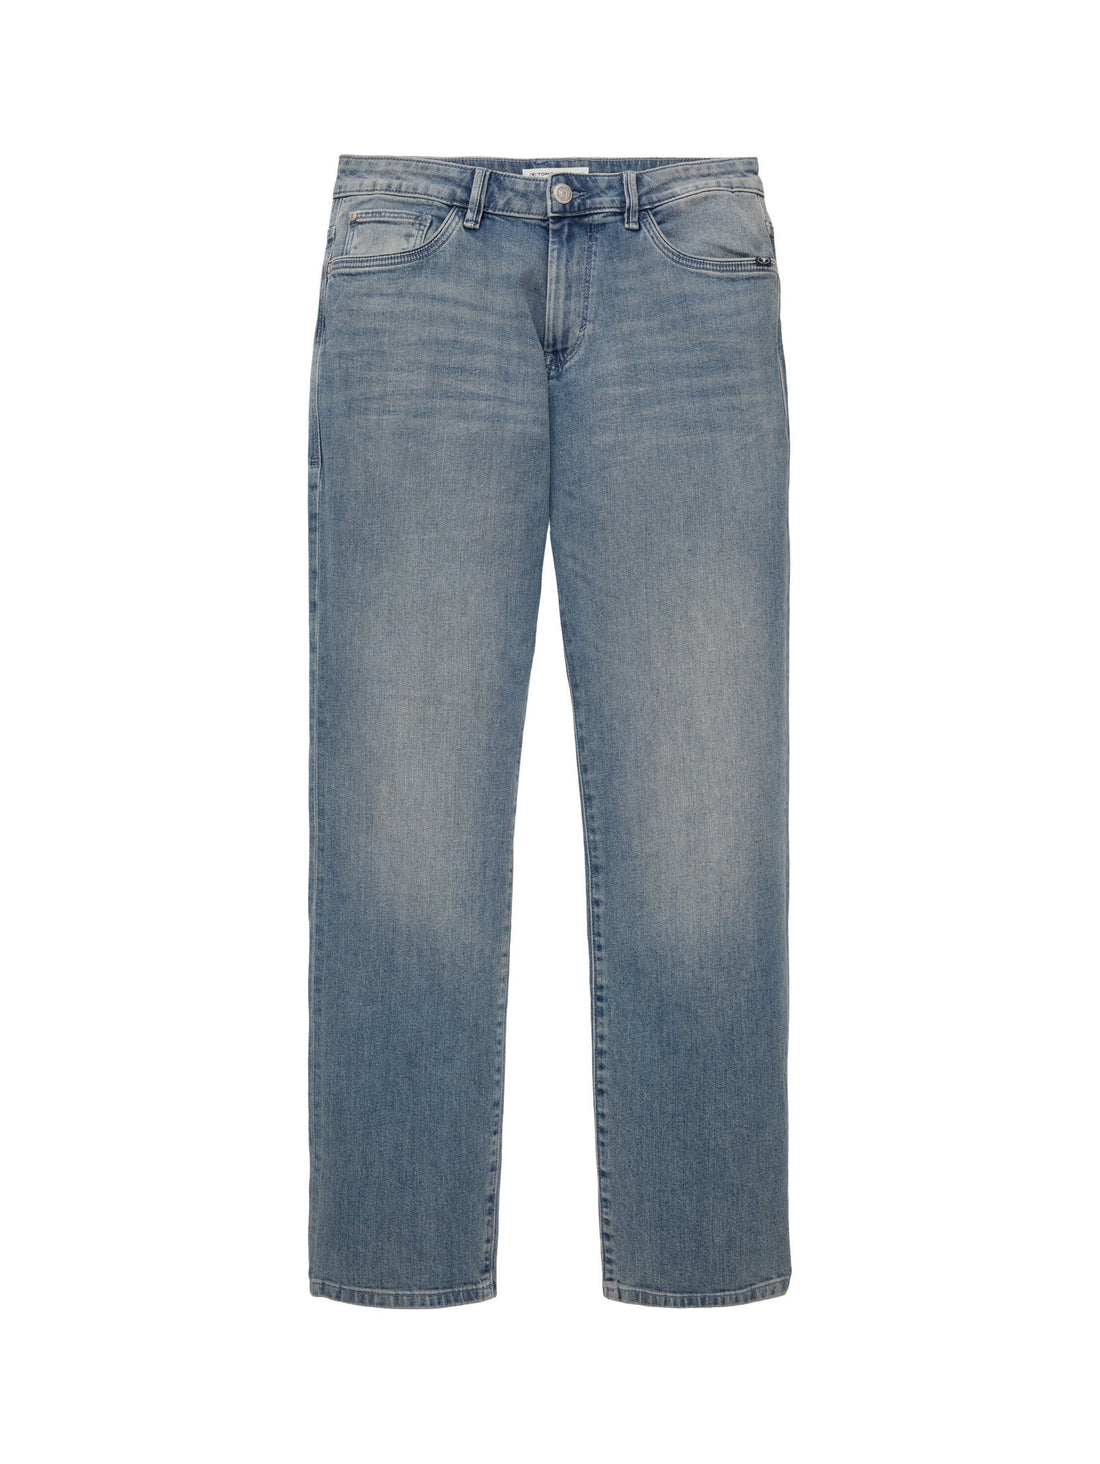 Standard Loose Fit Jeans_1035877_10118_01